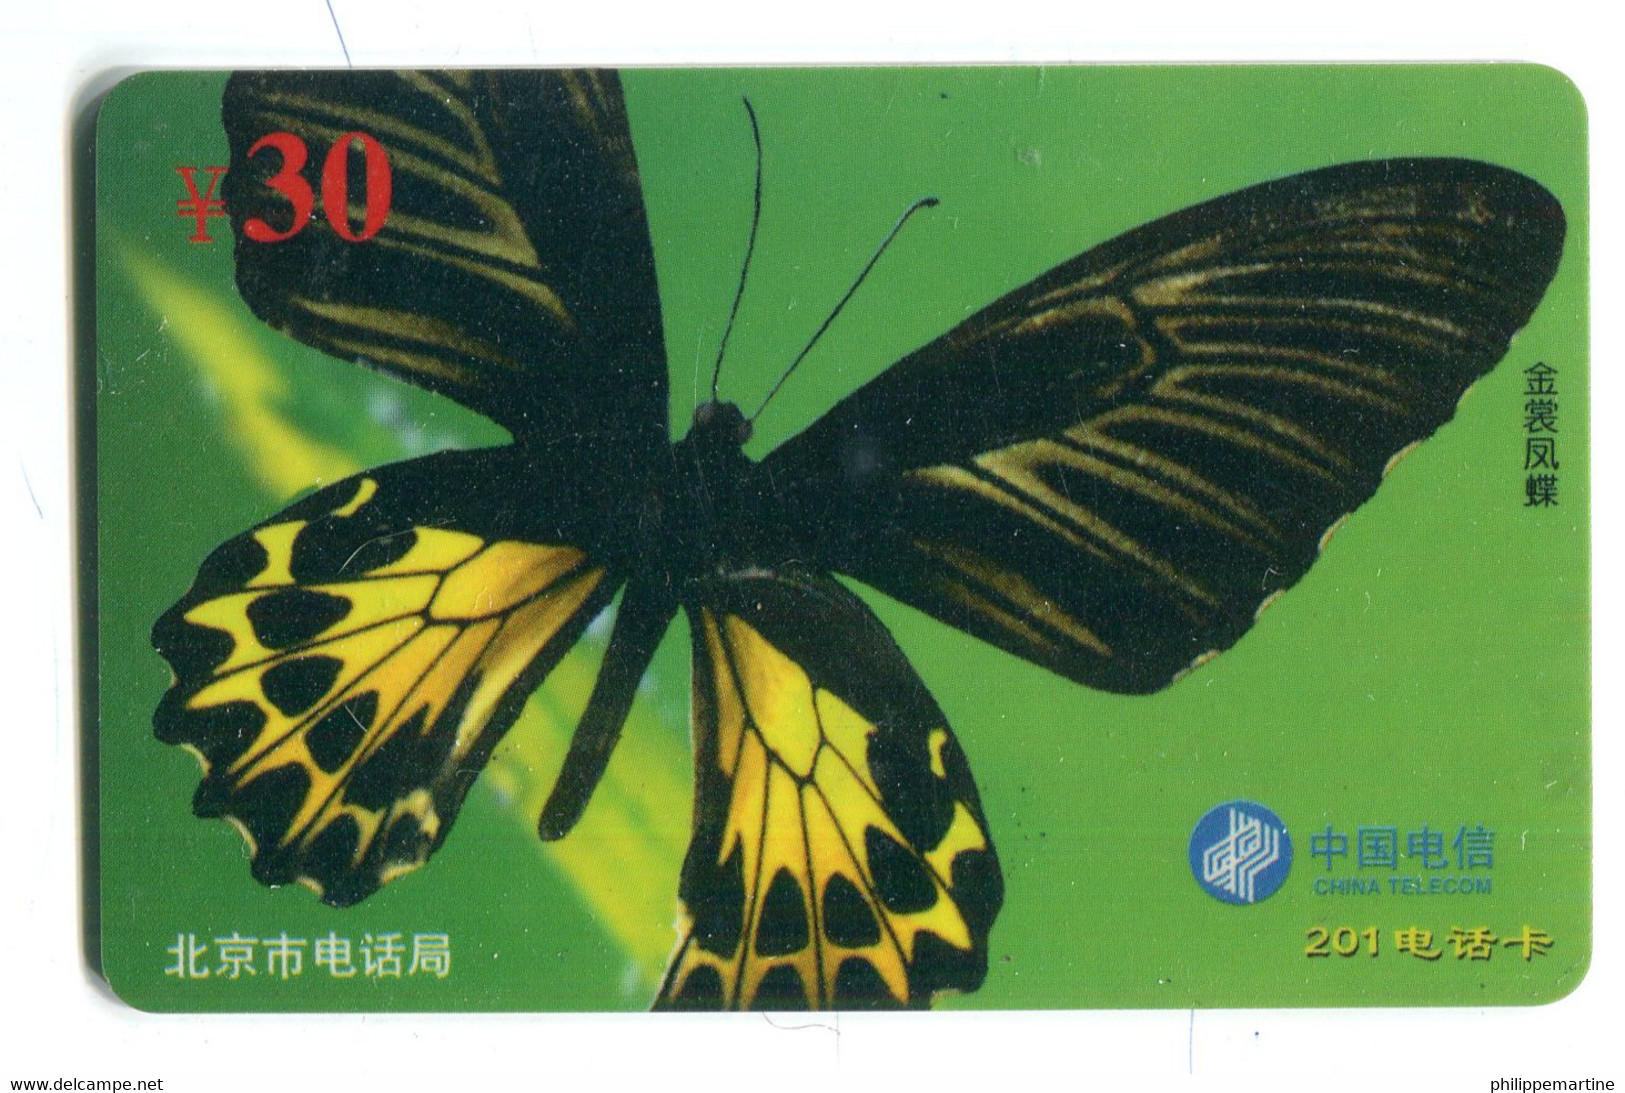 Télécarte China Telecom : Papillon - Farfalle